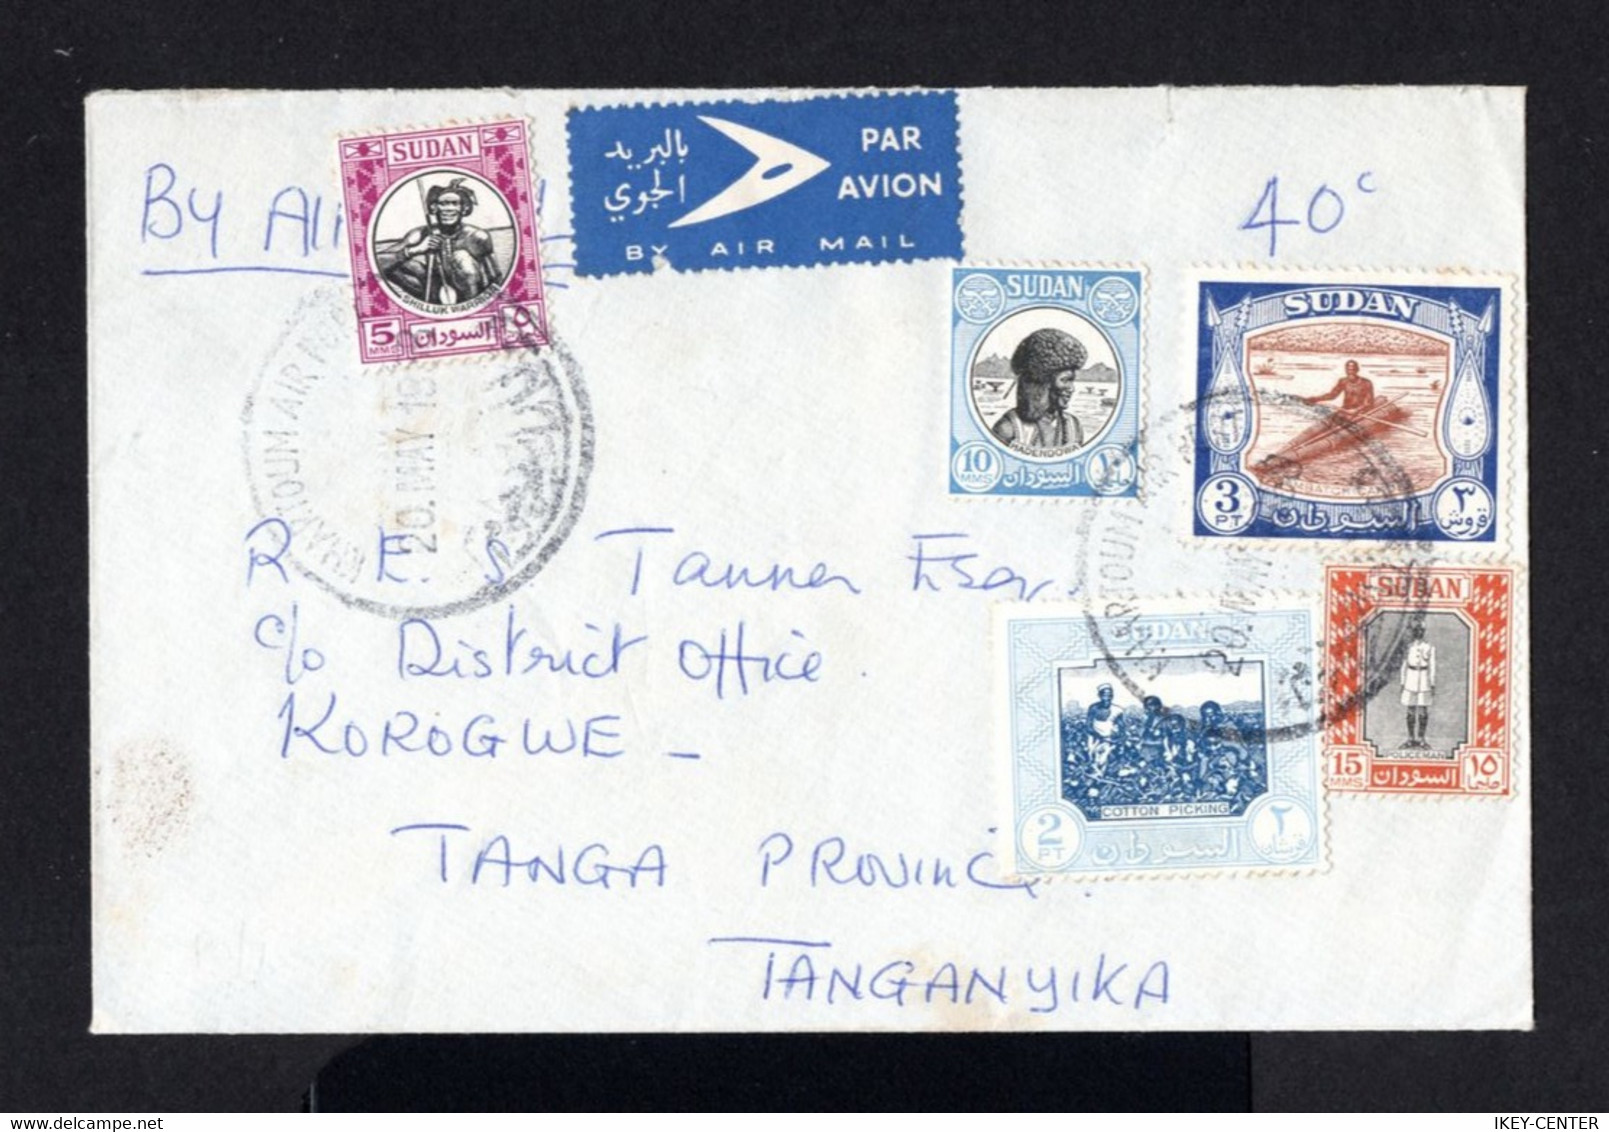 S4836-SUDAN-AIRMAIL COVER KHARTOUM To TANGA (tanganyika).1958.Enveloppe AERIEN SOUDAN - Sud-Soudan